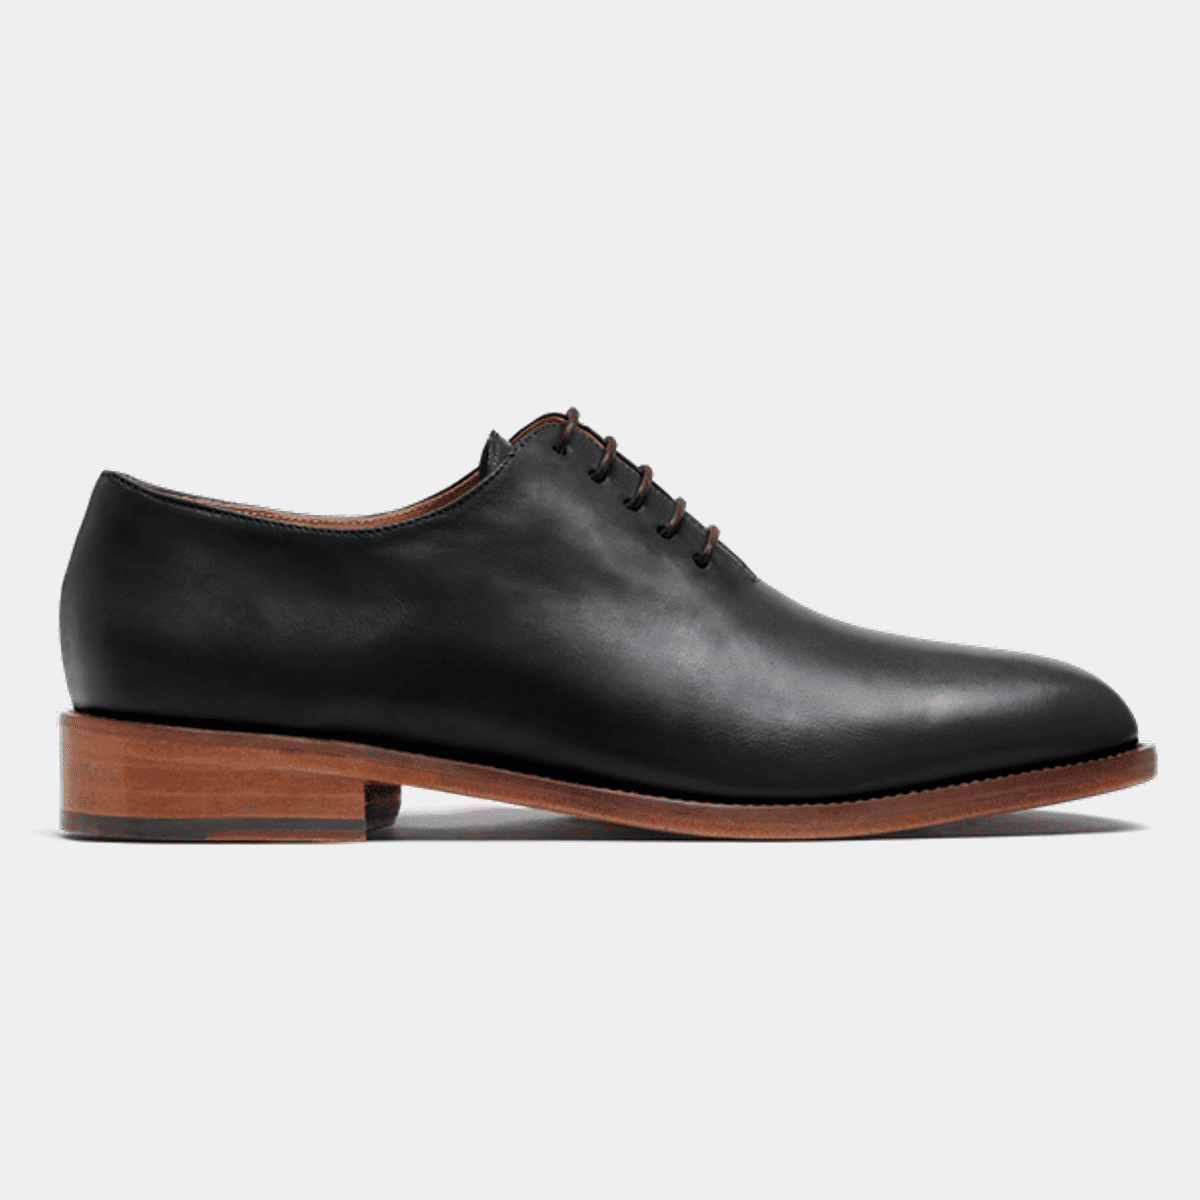 Wholecut Oxford shoes - black leather